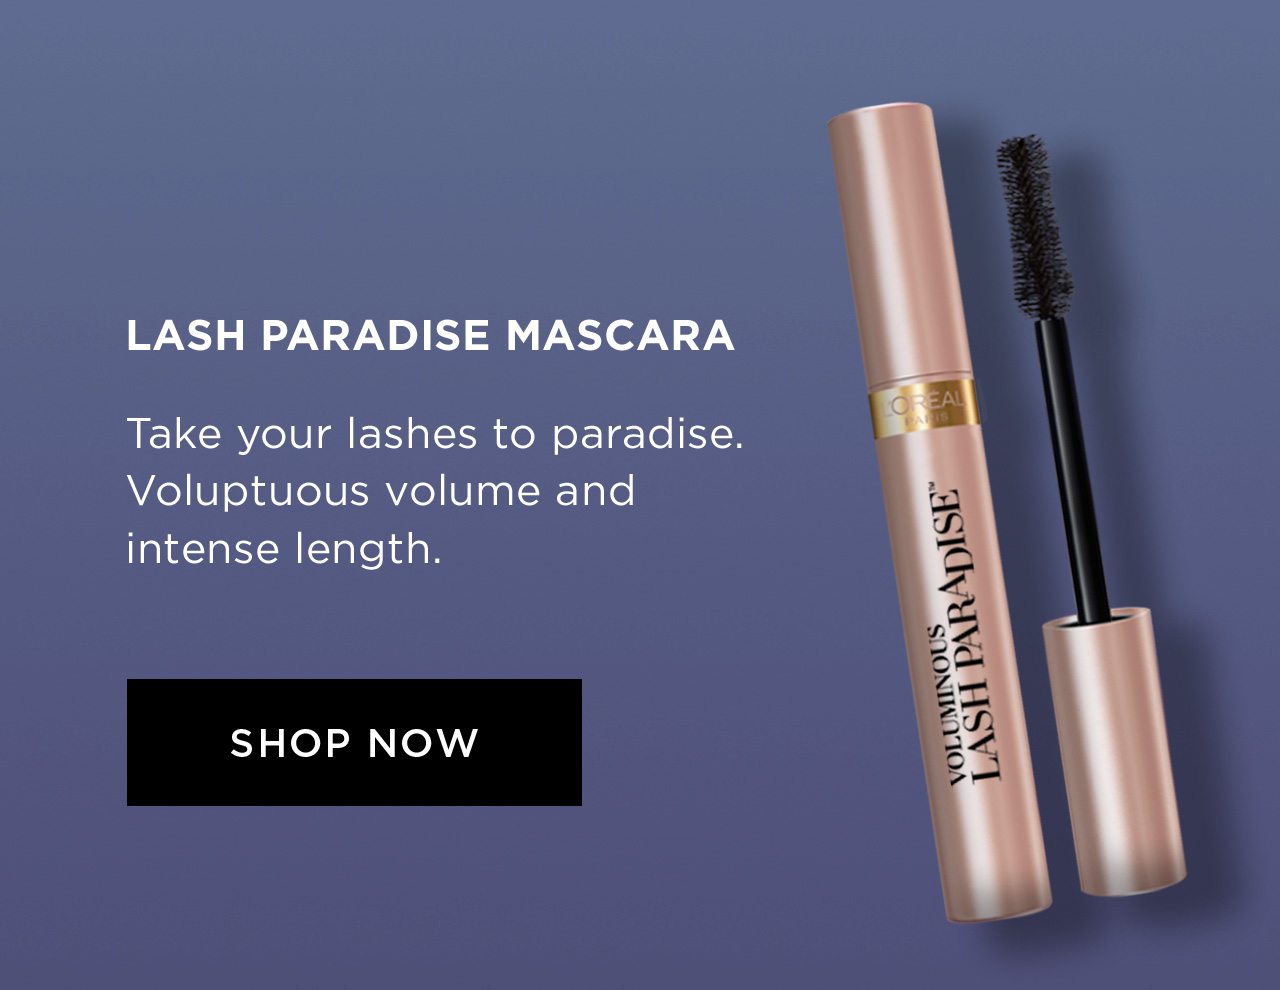 LASH PARADISE MASCARA - Take your lashes to paradise. Voluptuous volume and intense length. - SHOP NOW